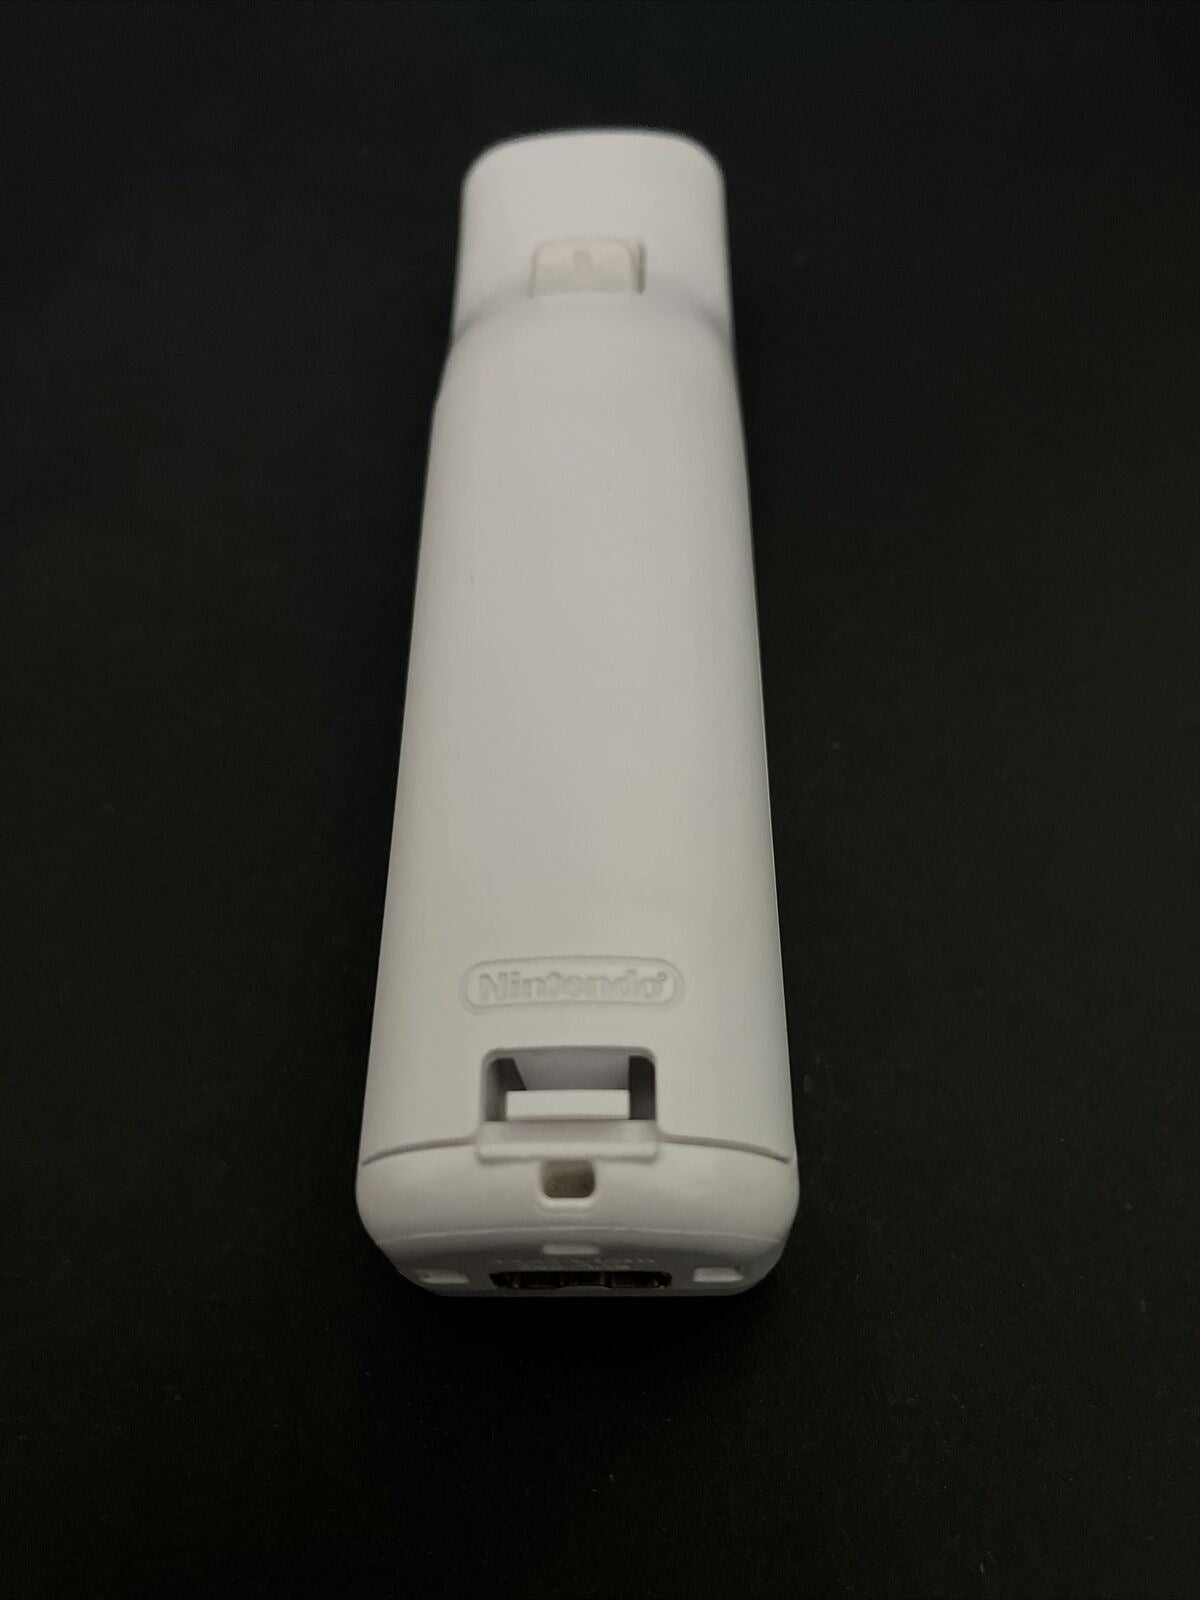 Genuine Nintendo Wii Remote Control Wiimote - 100% Official Nintendo product